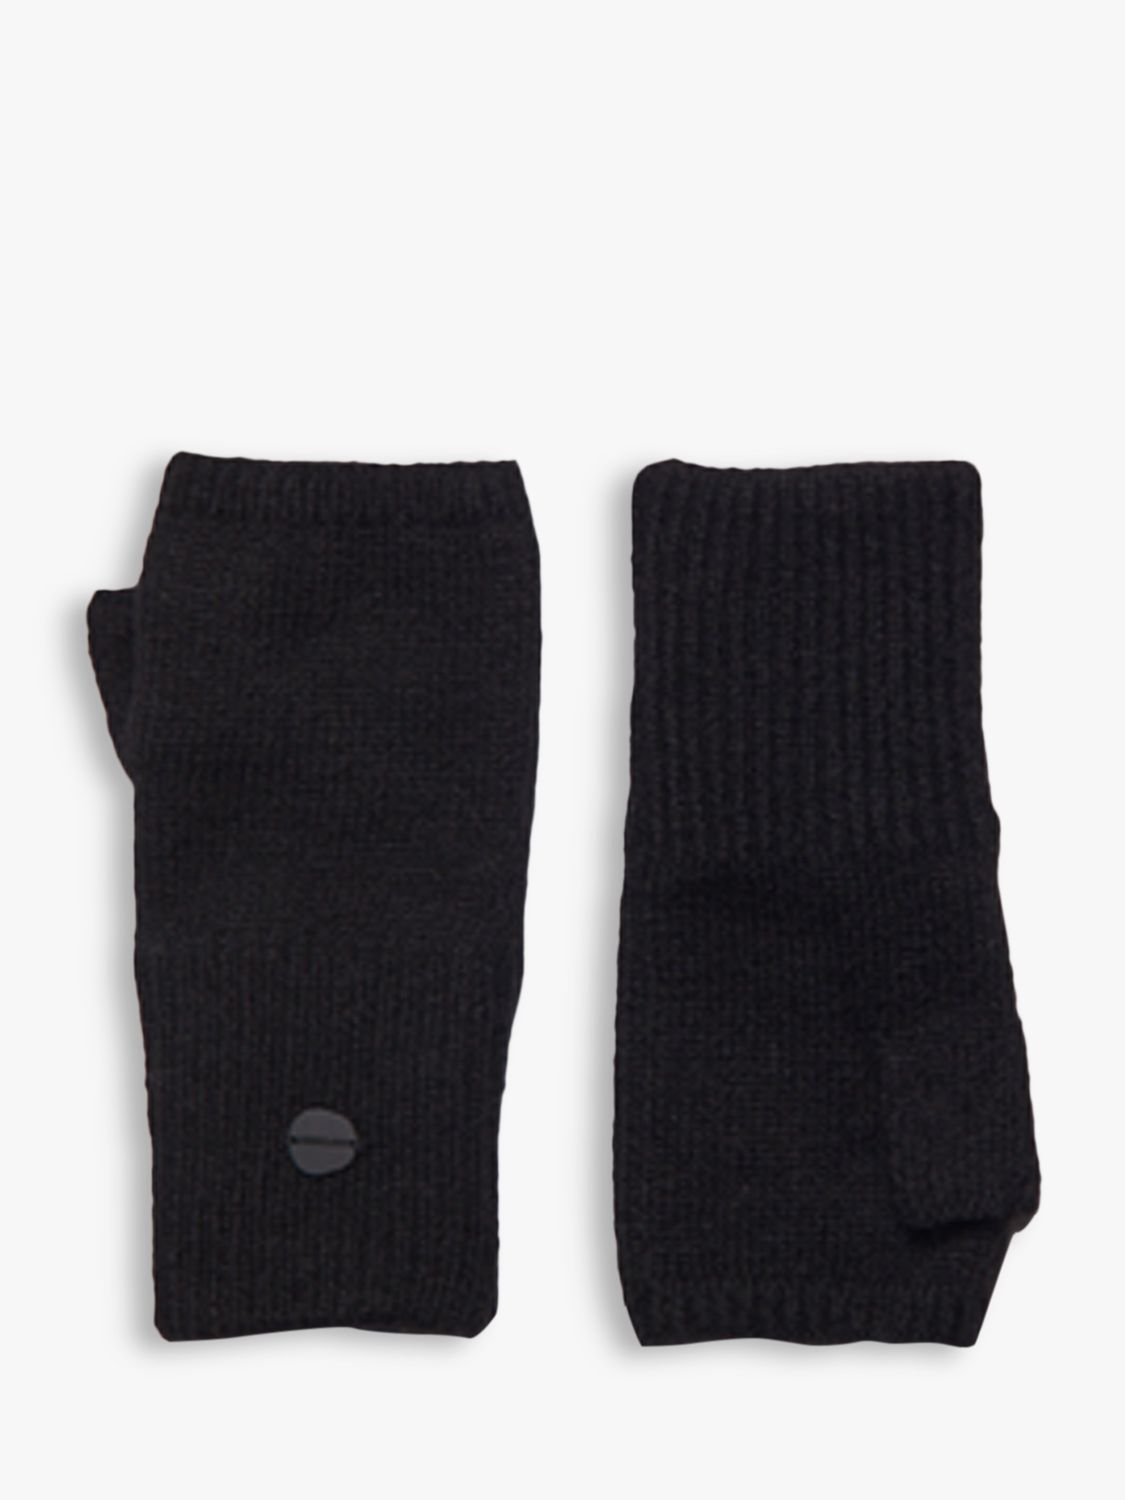 Superdry Studios Luxe Half Gloves, Black